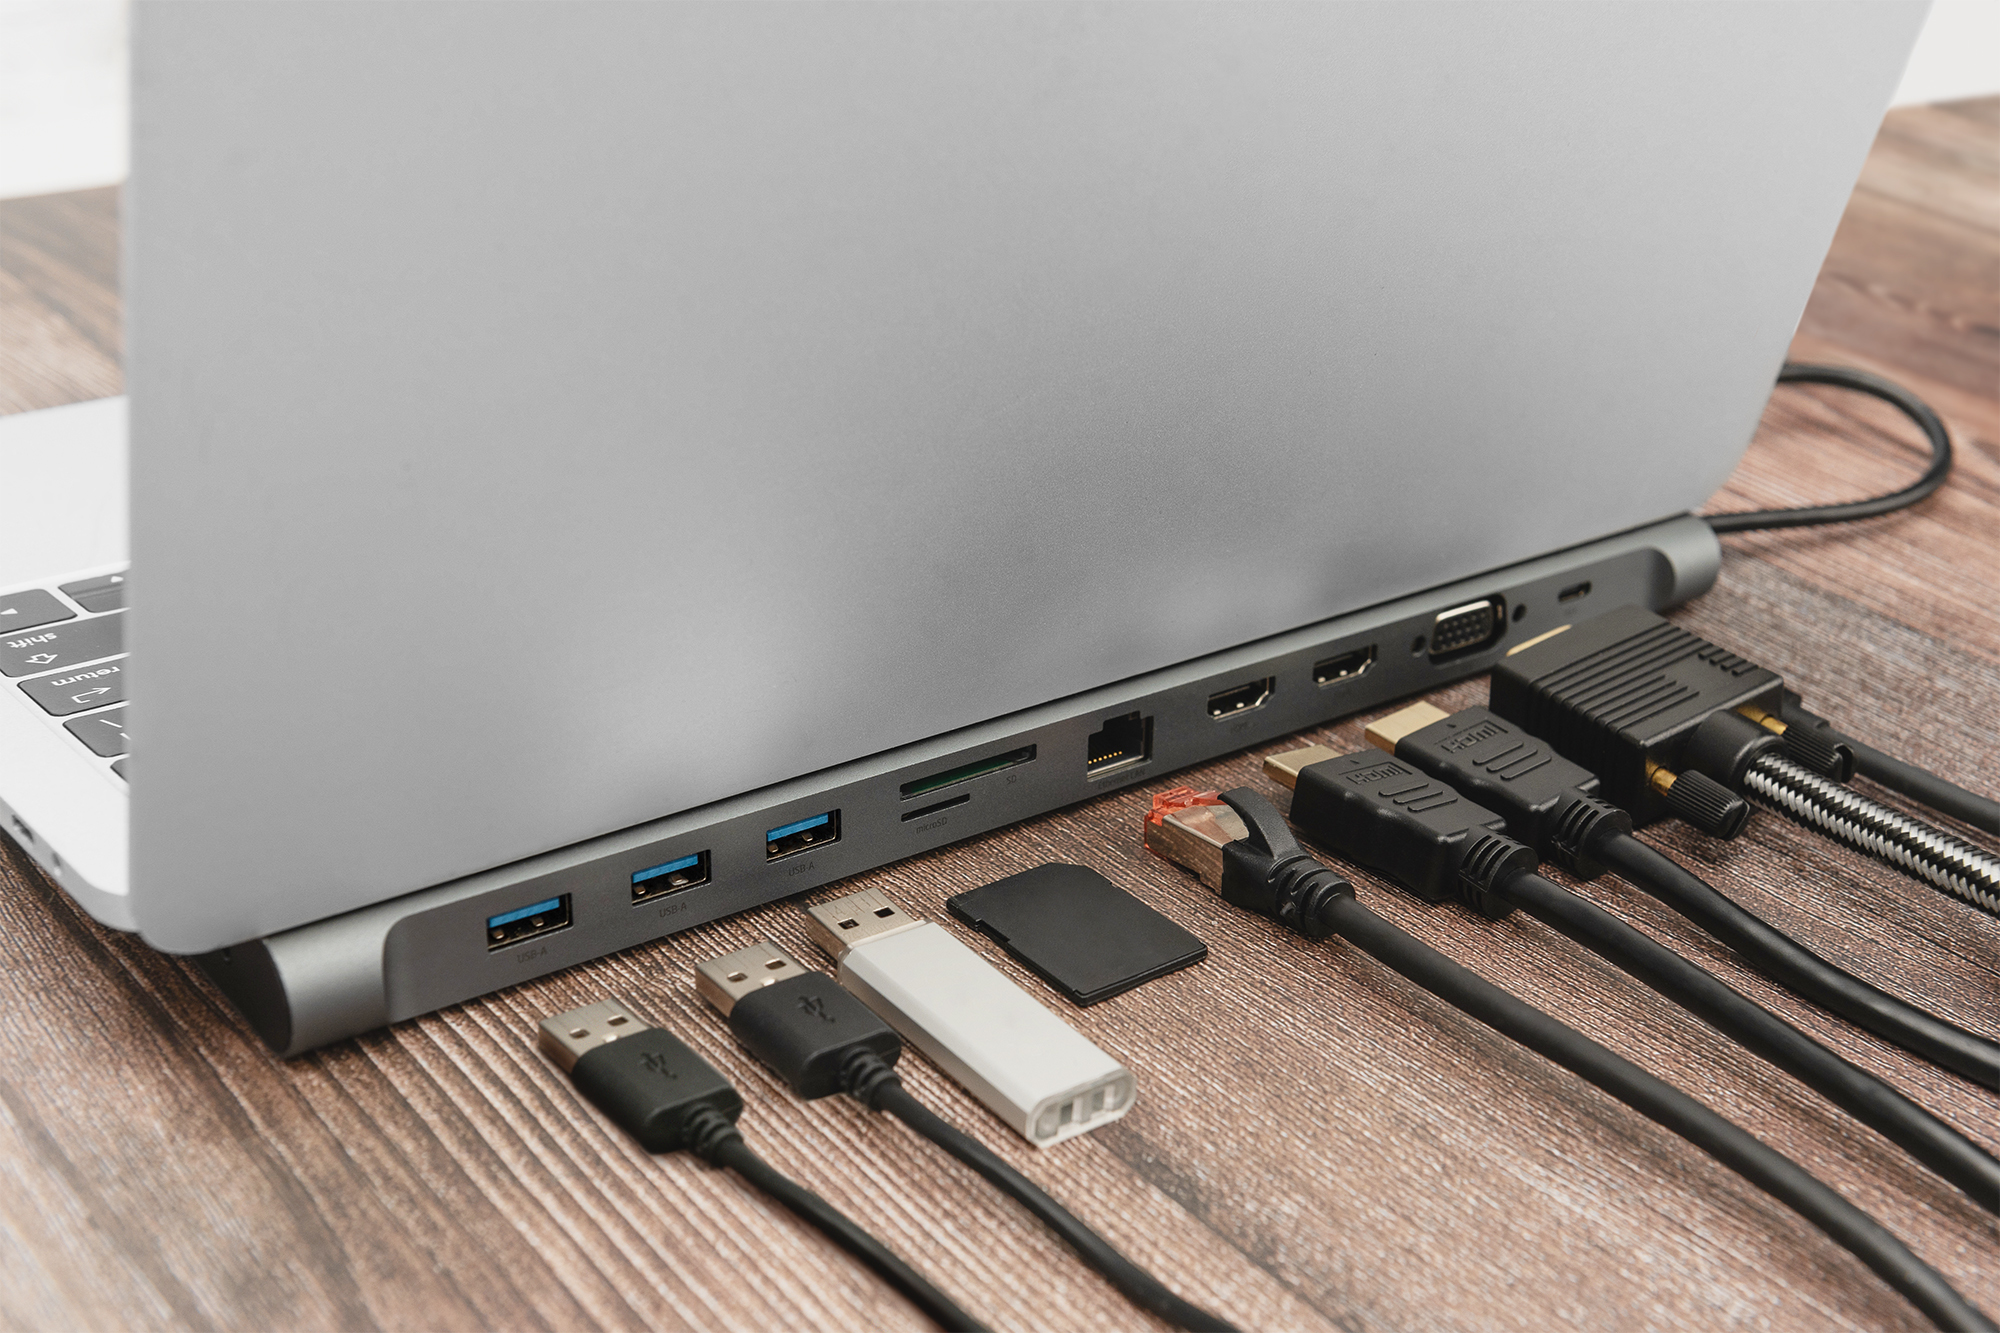 DIGITUS Dock USB-C 11 porte, grigio, 2x HDMI, VGA USB-C, 3x USB-A, RJ45, 1x 3,5mm, SD/microSD